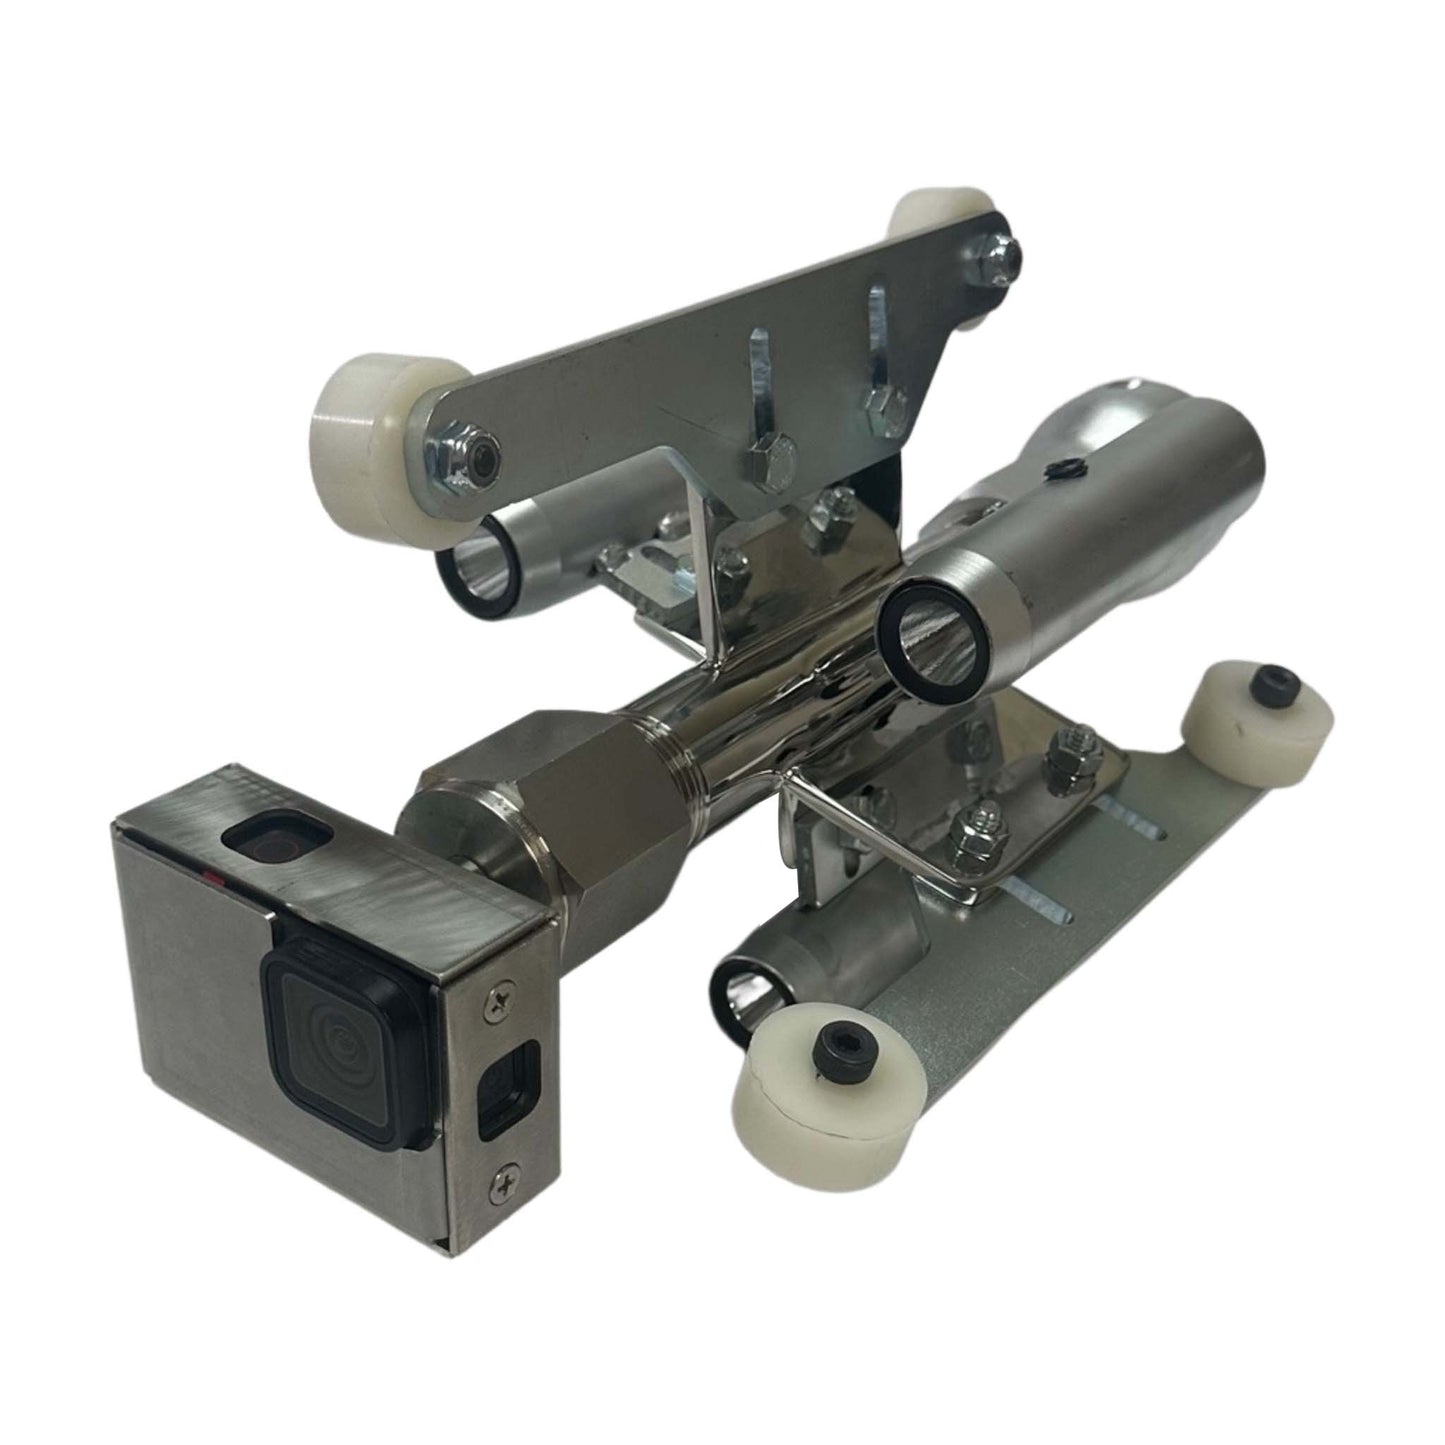 ST-PRO CAM Jet Camera Nozzle Complete Kit